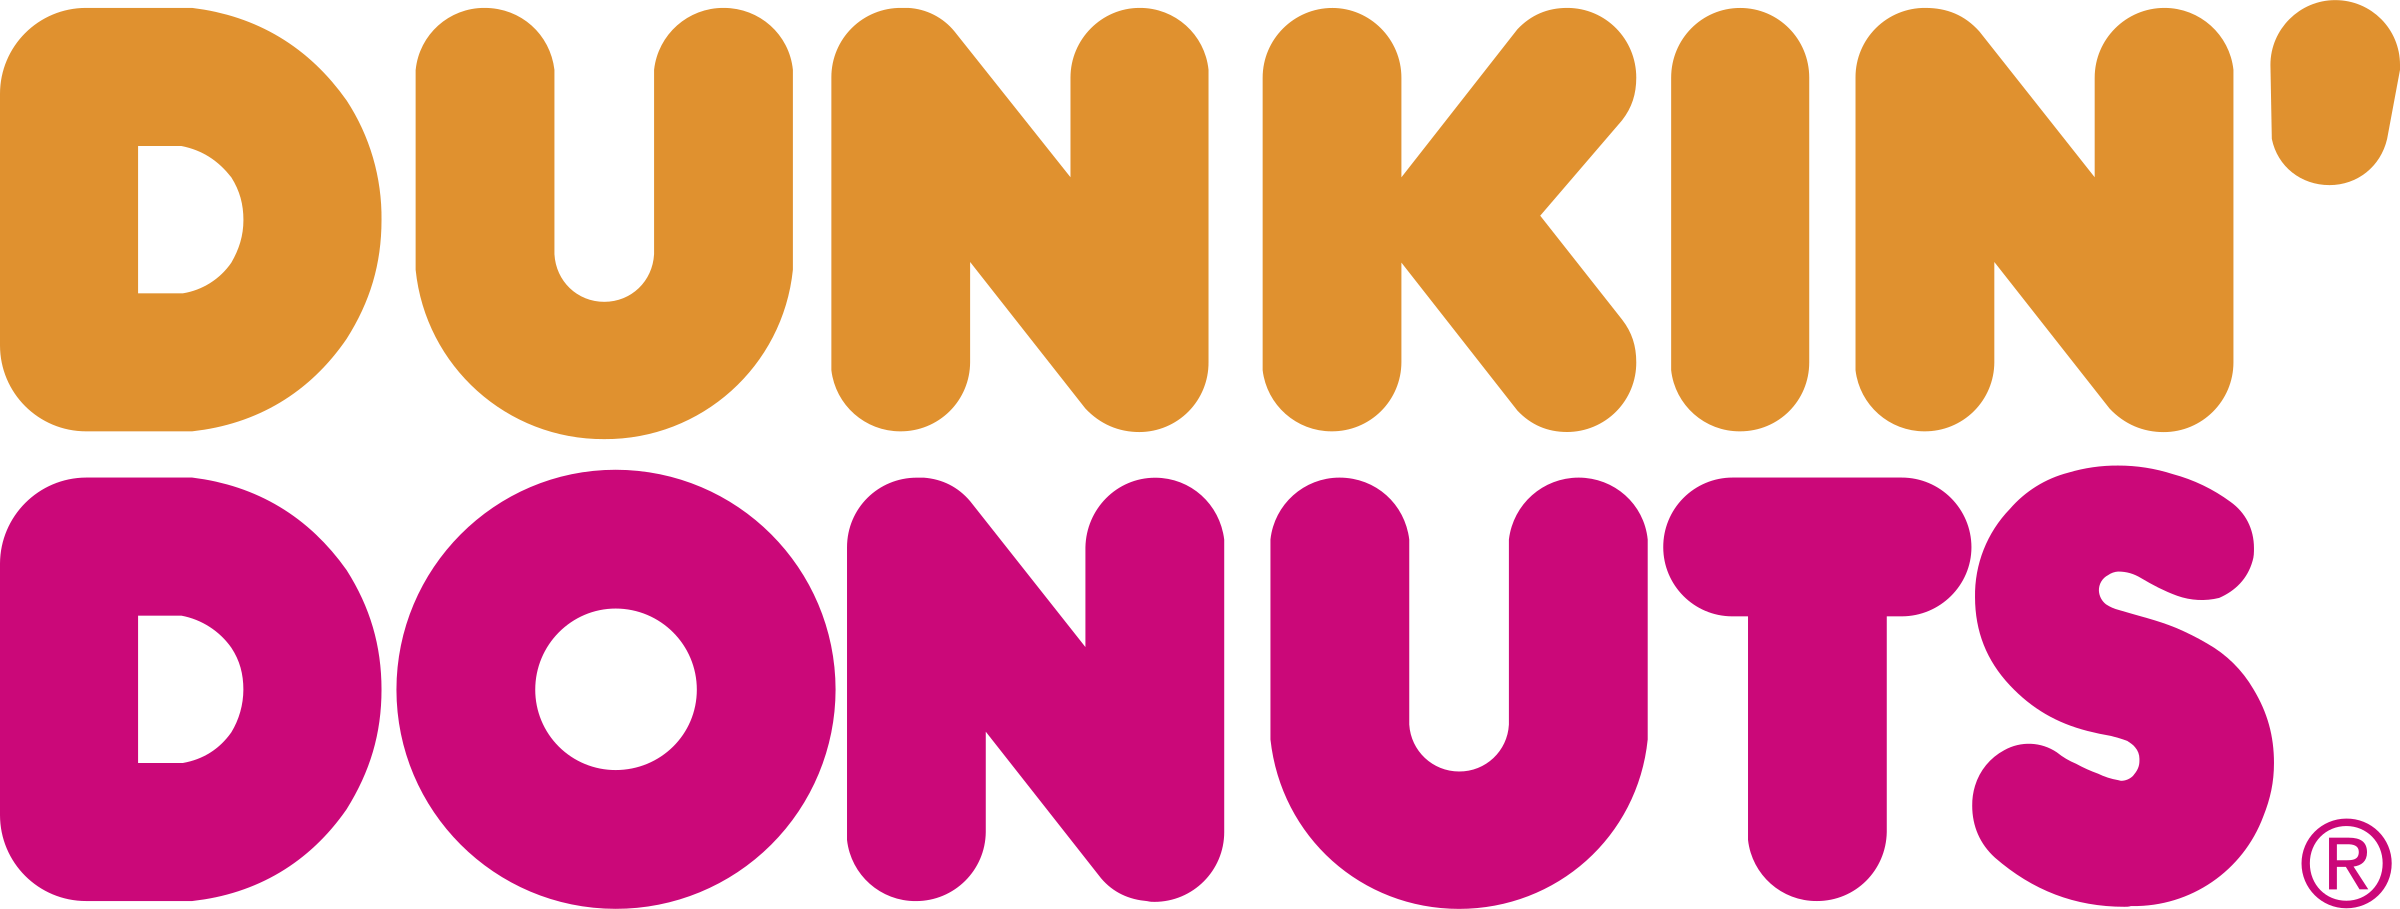 Dunkin-donuts-1-logo-png-transparent.png